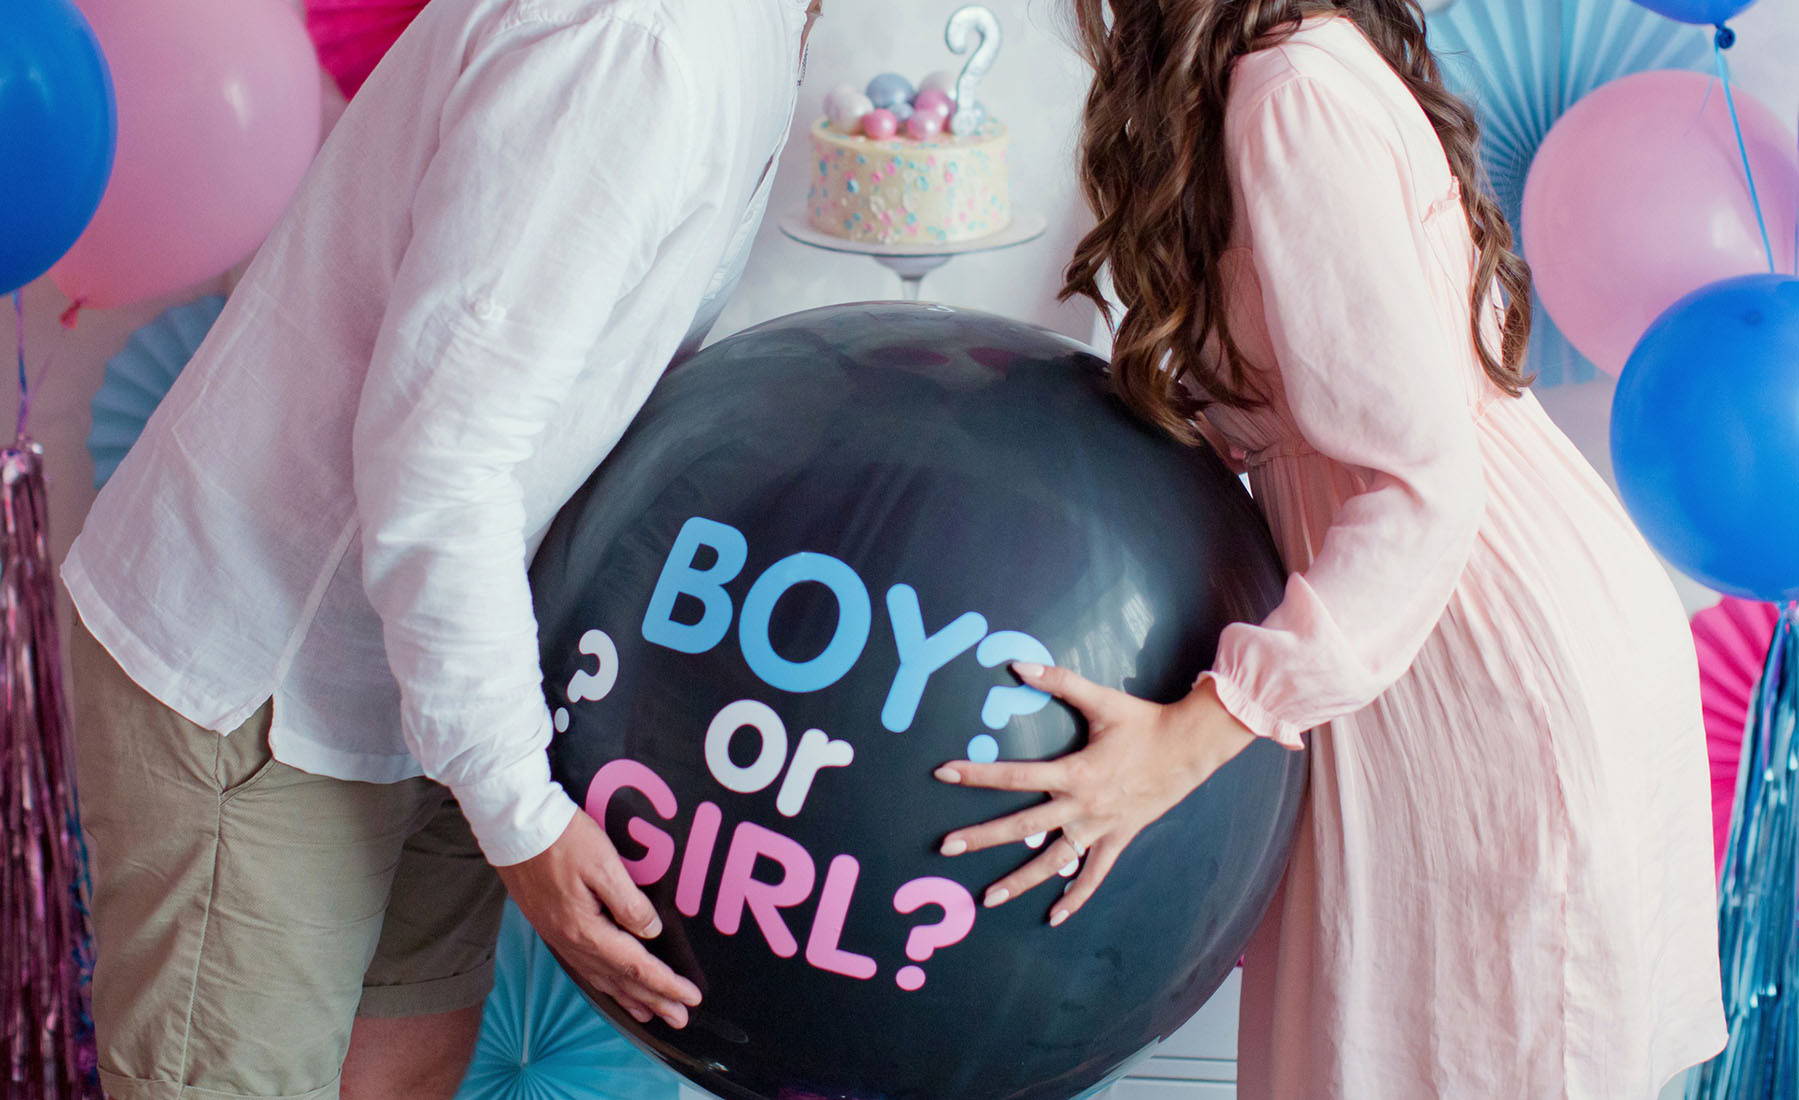 Gender Reveal – Pick & Mix ballon